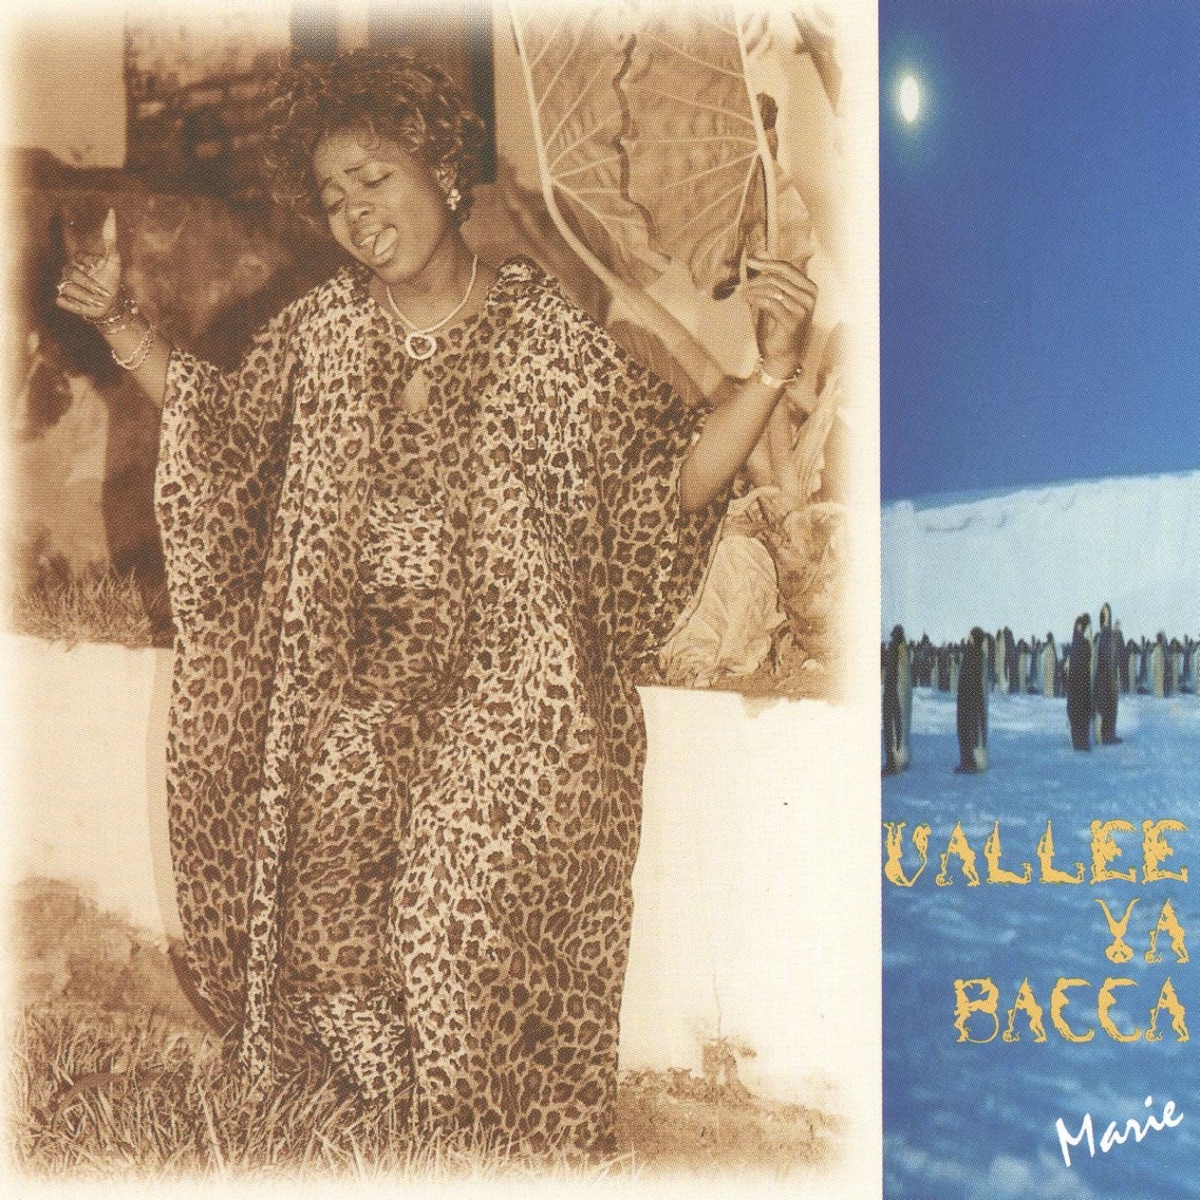 Vallée ya bacca - Album by Marie Misamu - Apple Music